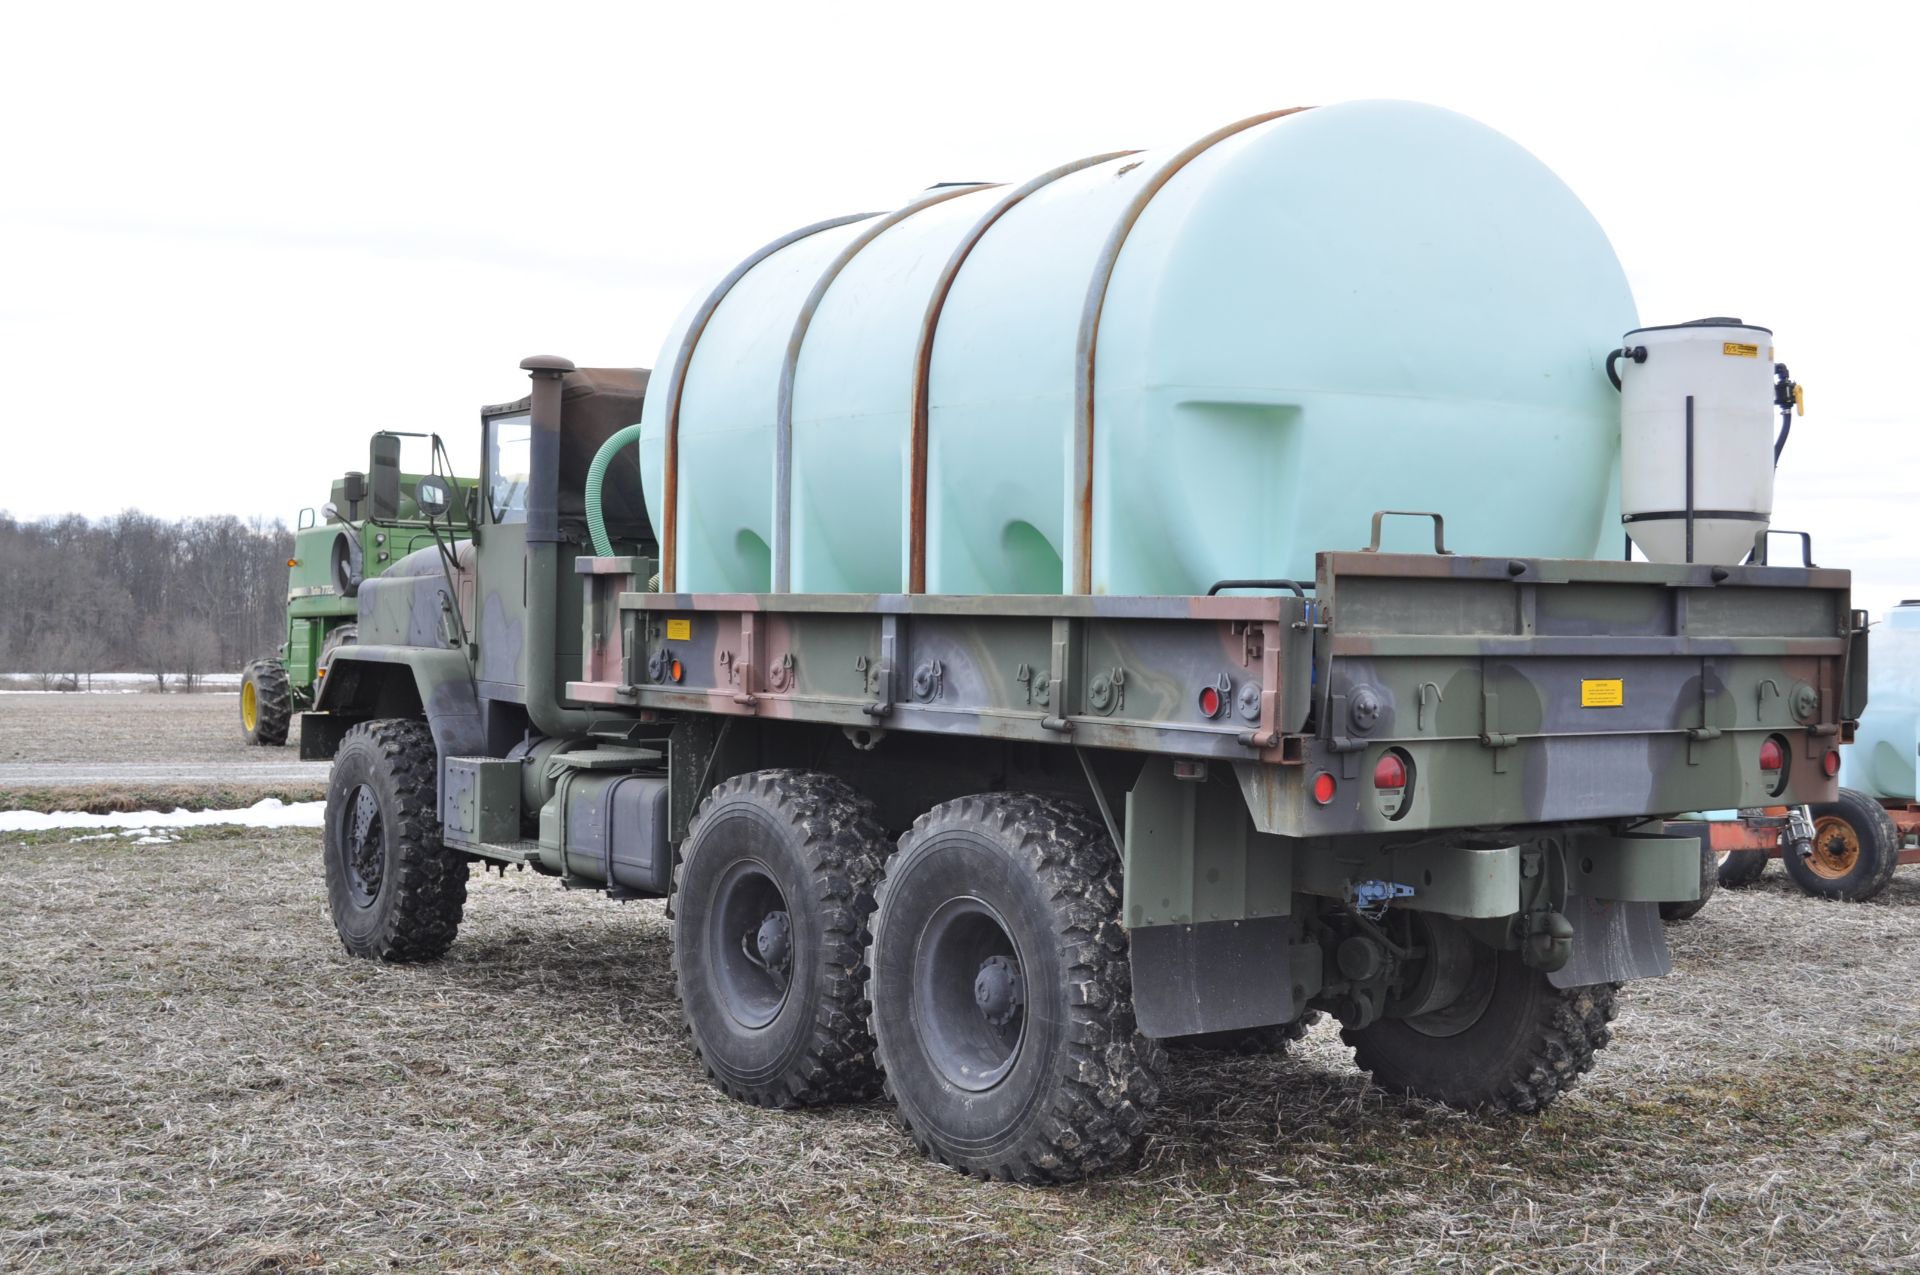 Harsco 5 Ton 6x6 military truck - Image 2 of 31